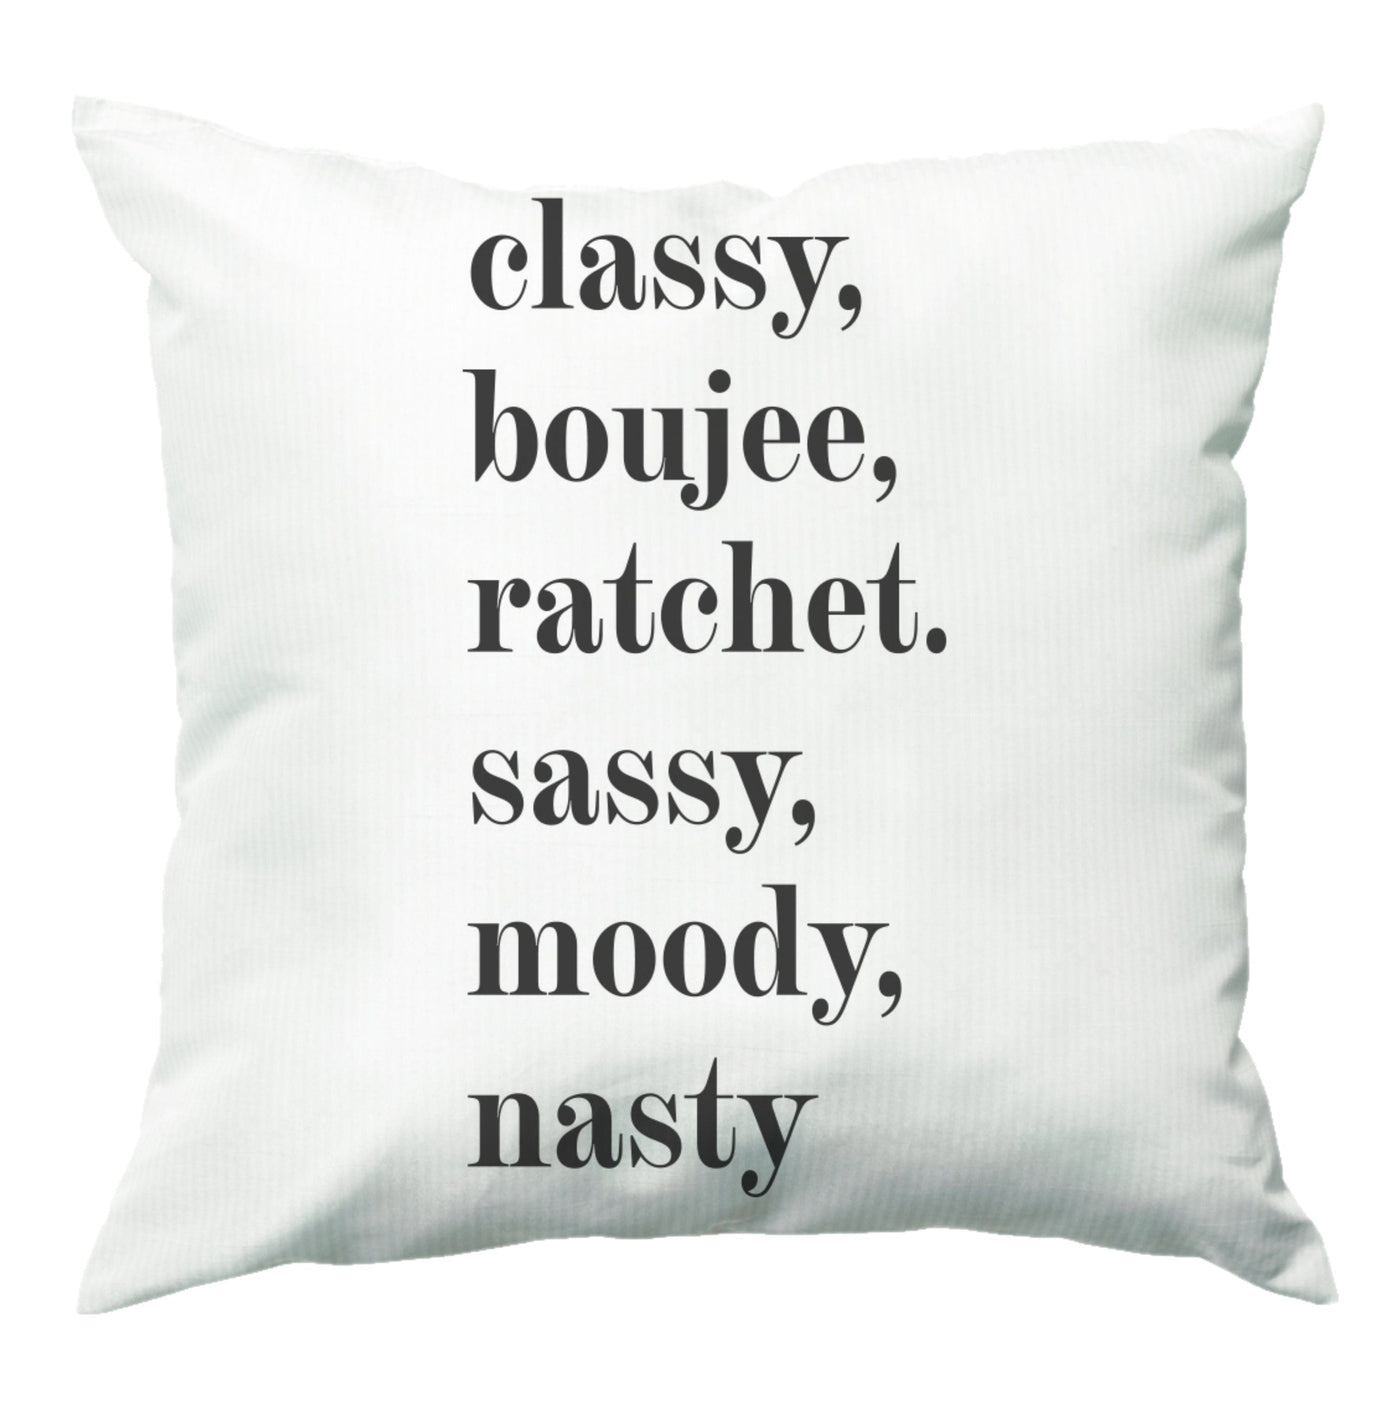 Classy Boujee Ratchet. Sassy Moddy Nasty - TikTok Cushion